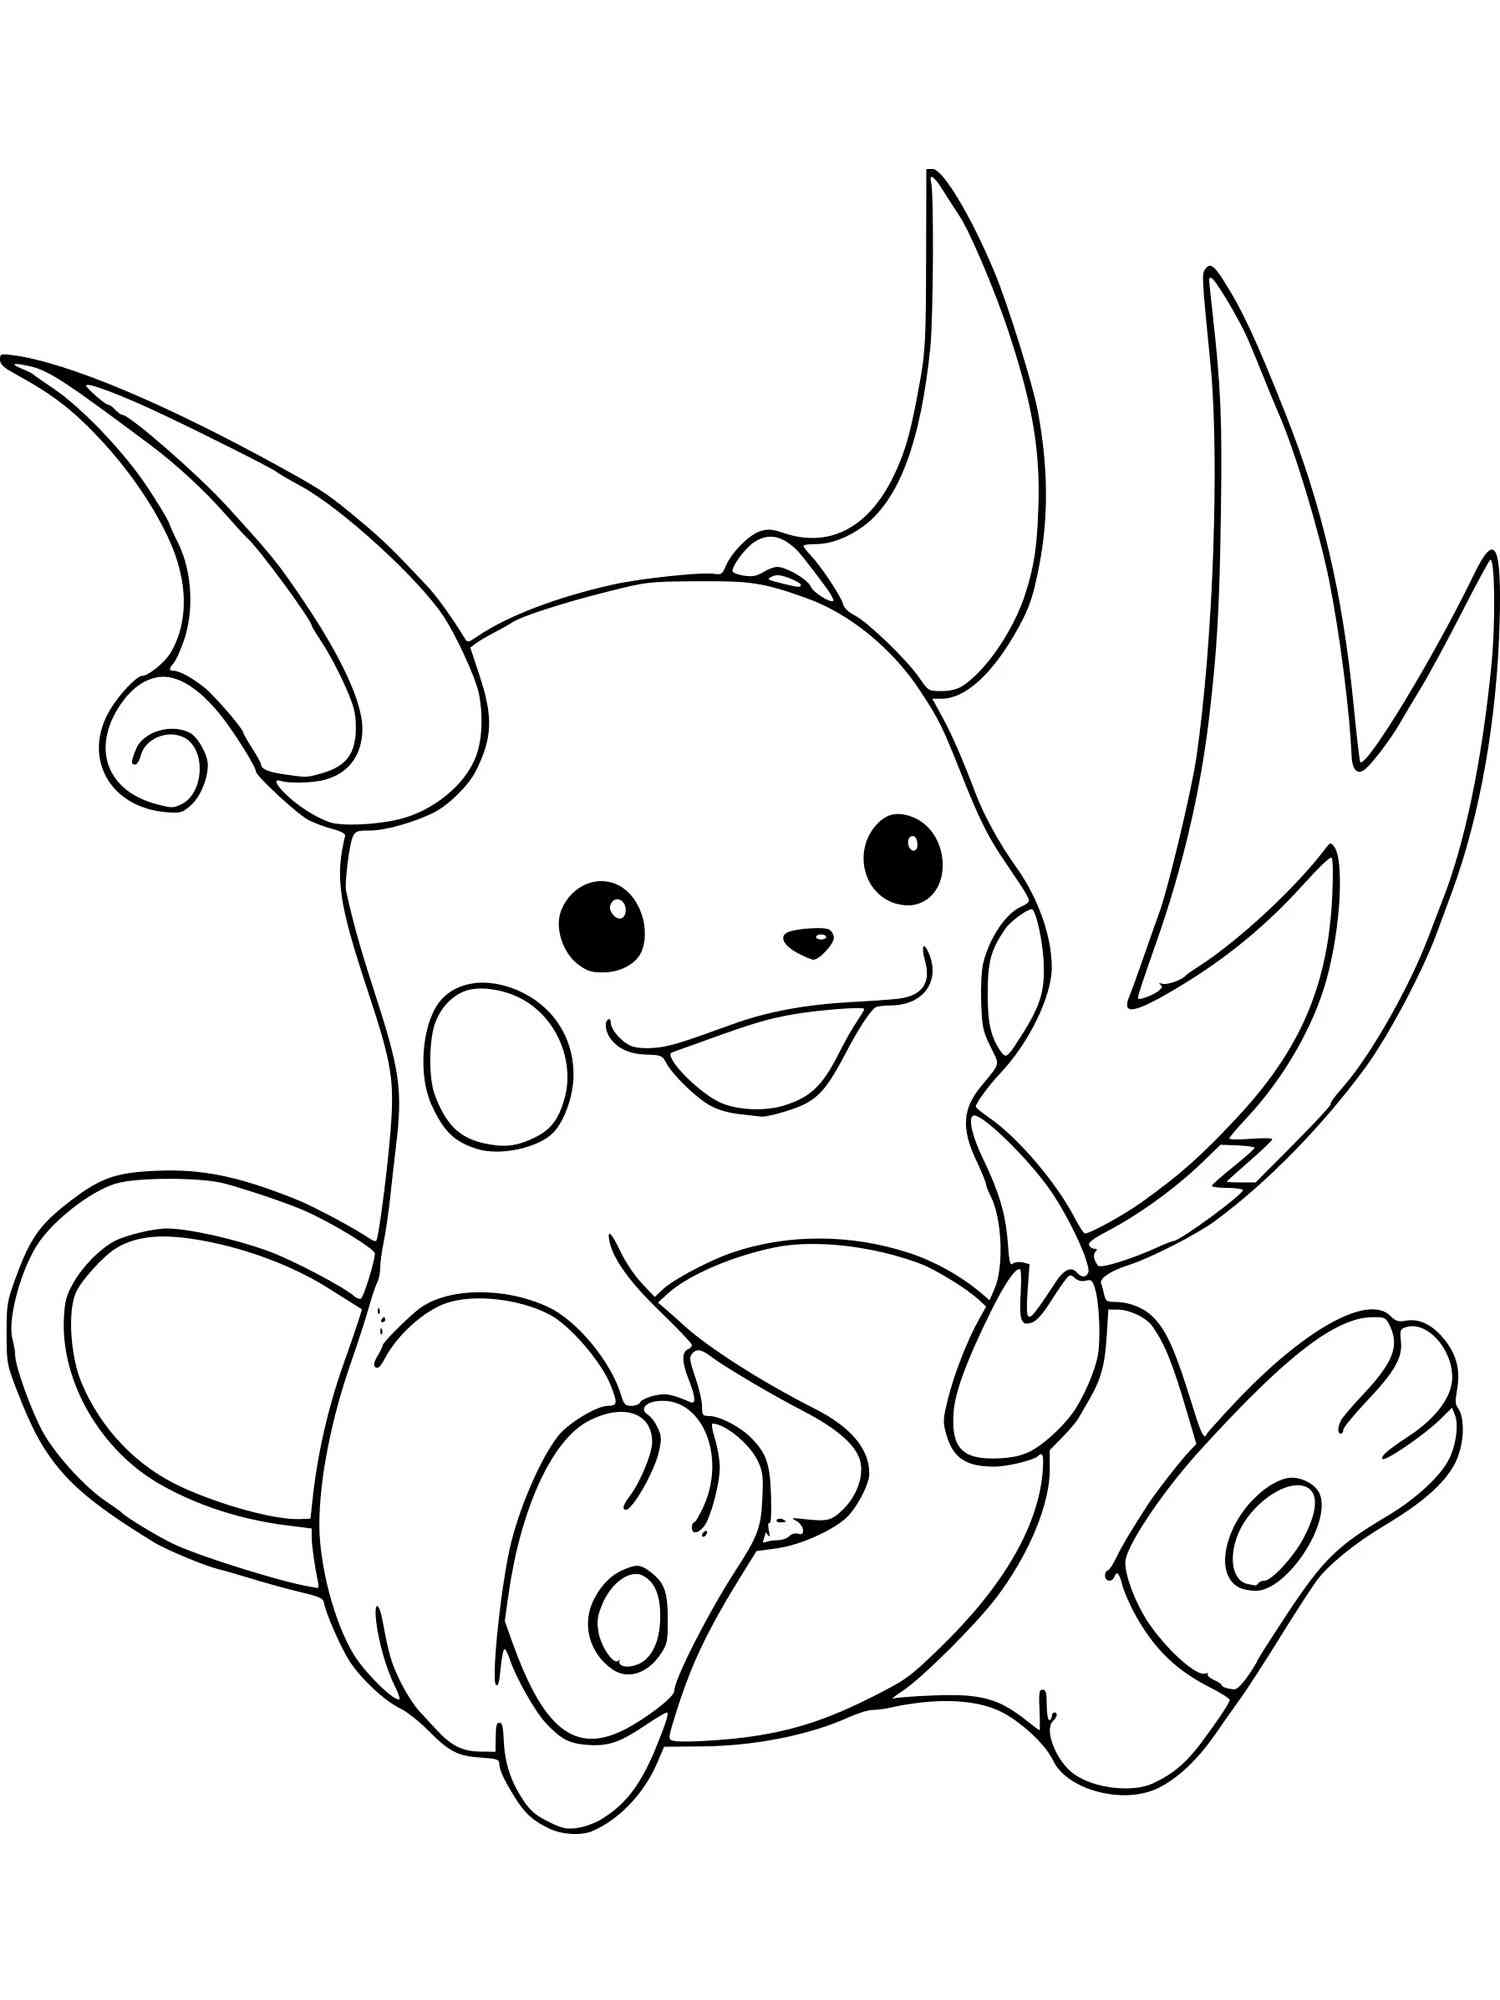 Pokemon Raichu coloring pages - Free Printable